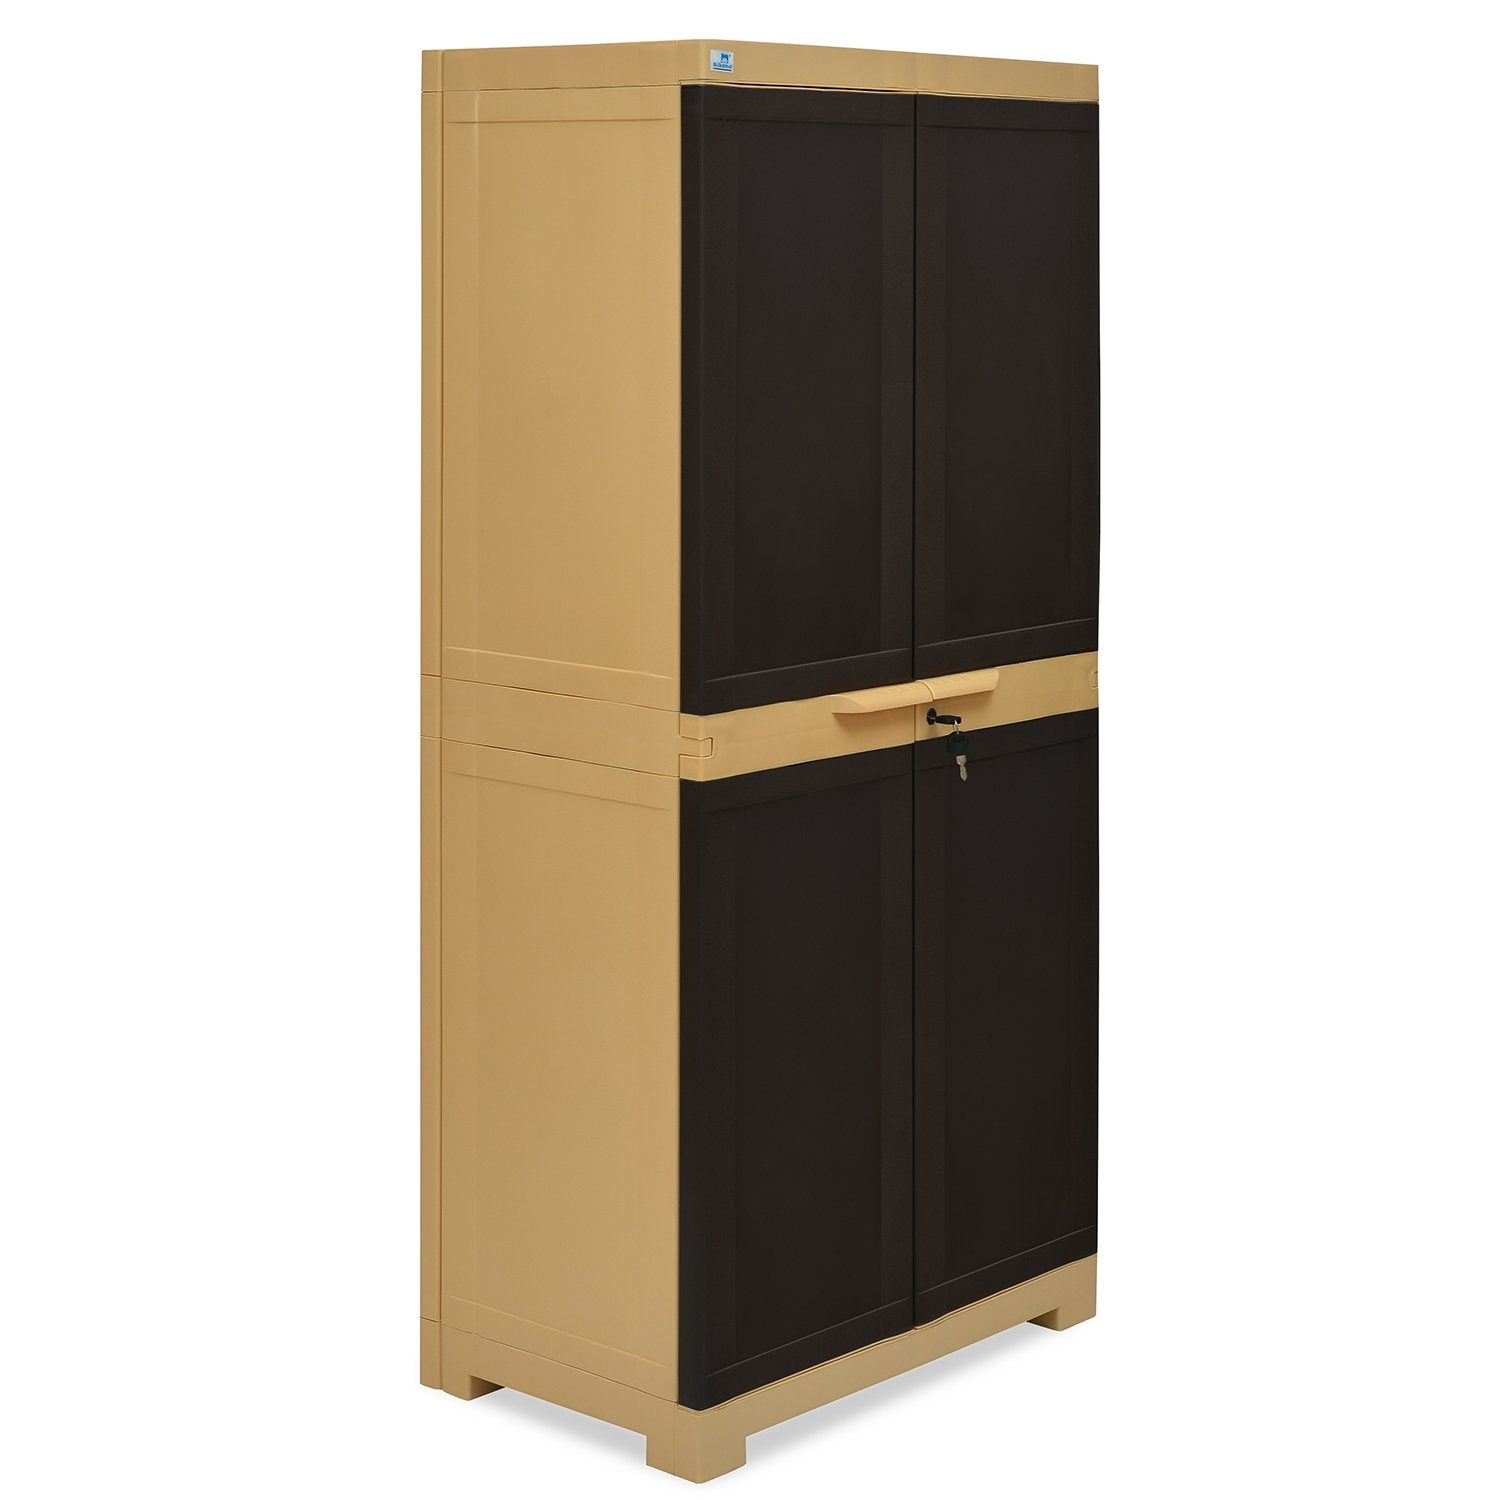 Nilkamal Freedom Mini Medium (FMM) Plastic Storage Cabinet (Weathered Brown/Biscuit)